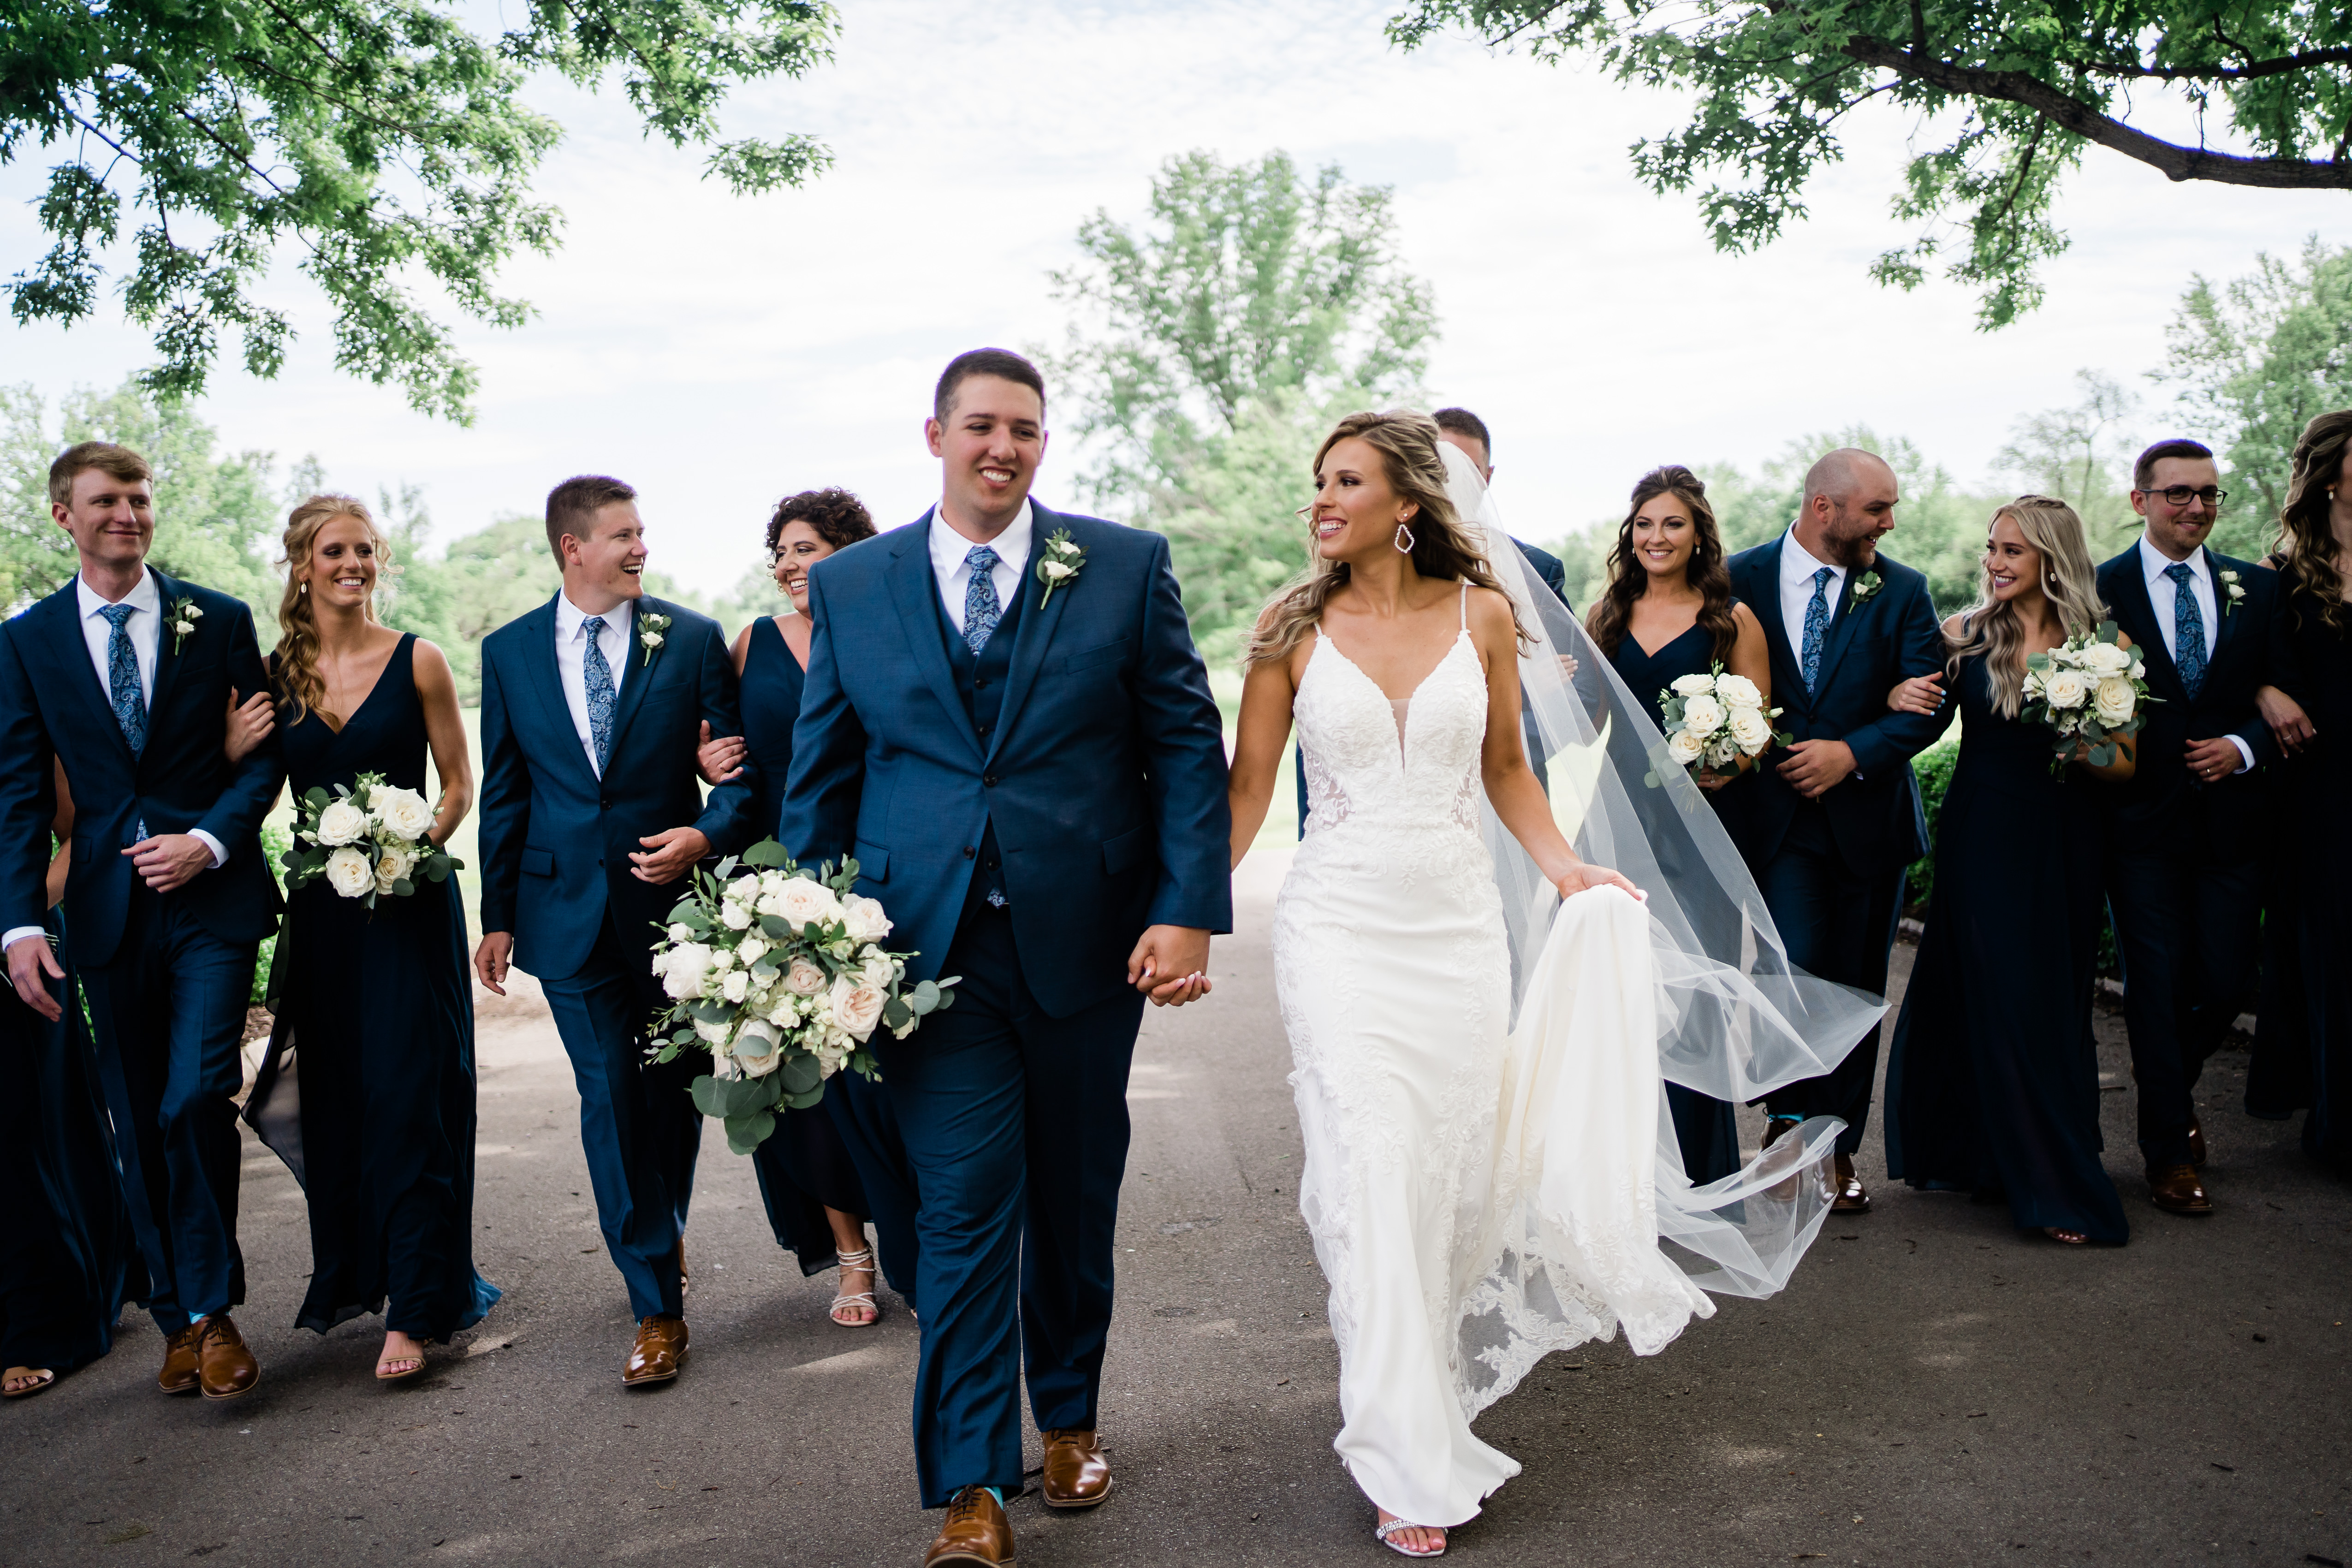 Fort wayne wedding photographers capture bride and groom walking with wedding party